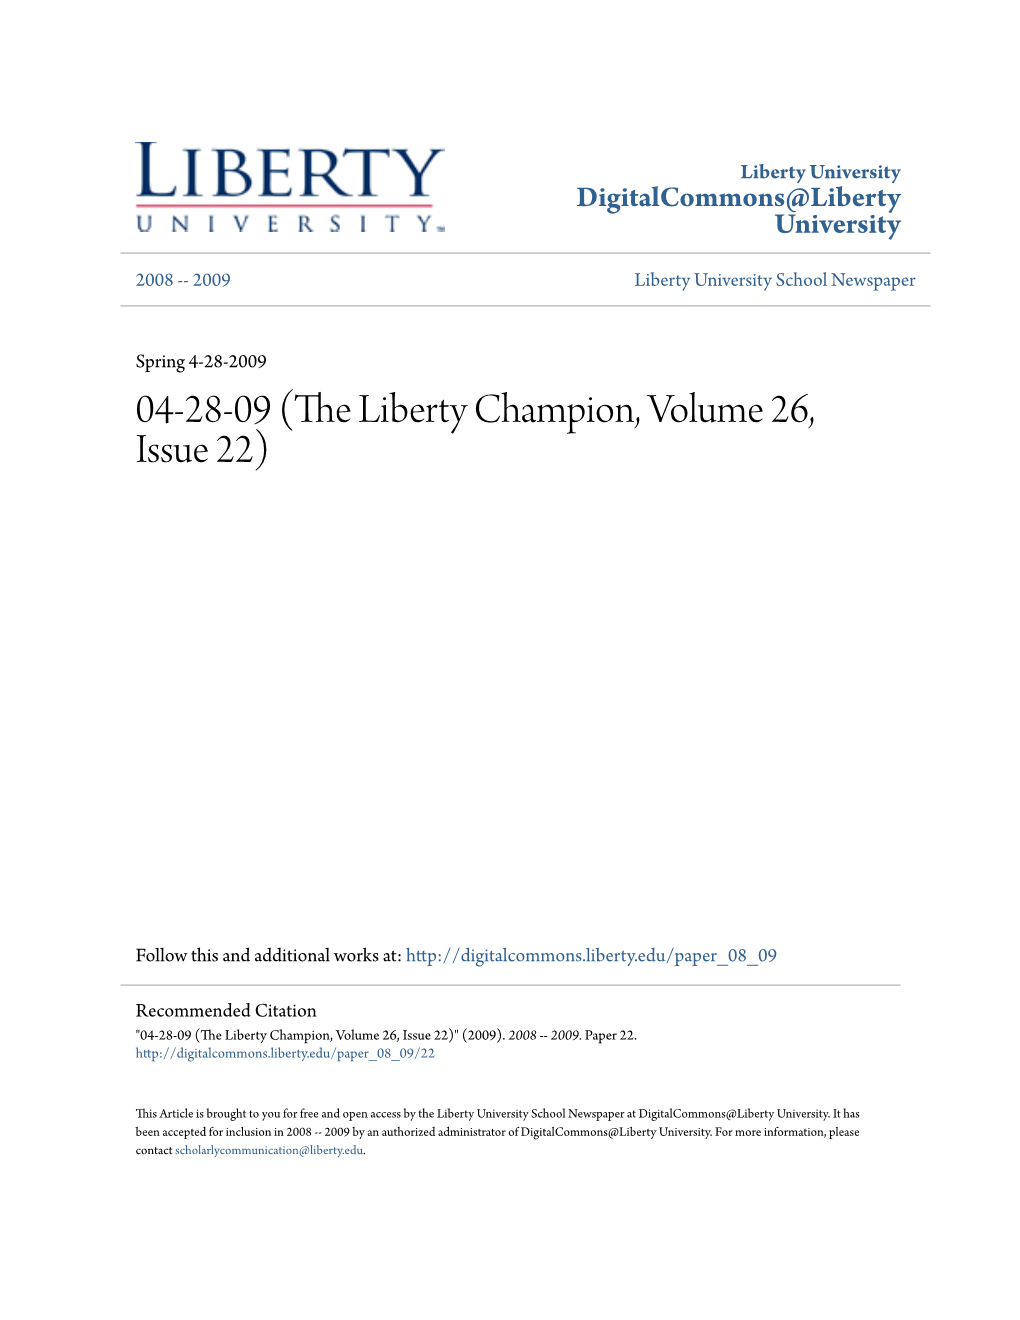 The Liberty Champion, Volume 26, Issue 22)